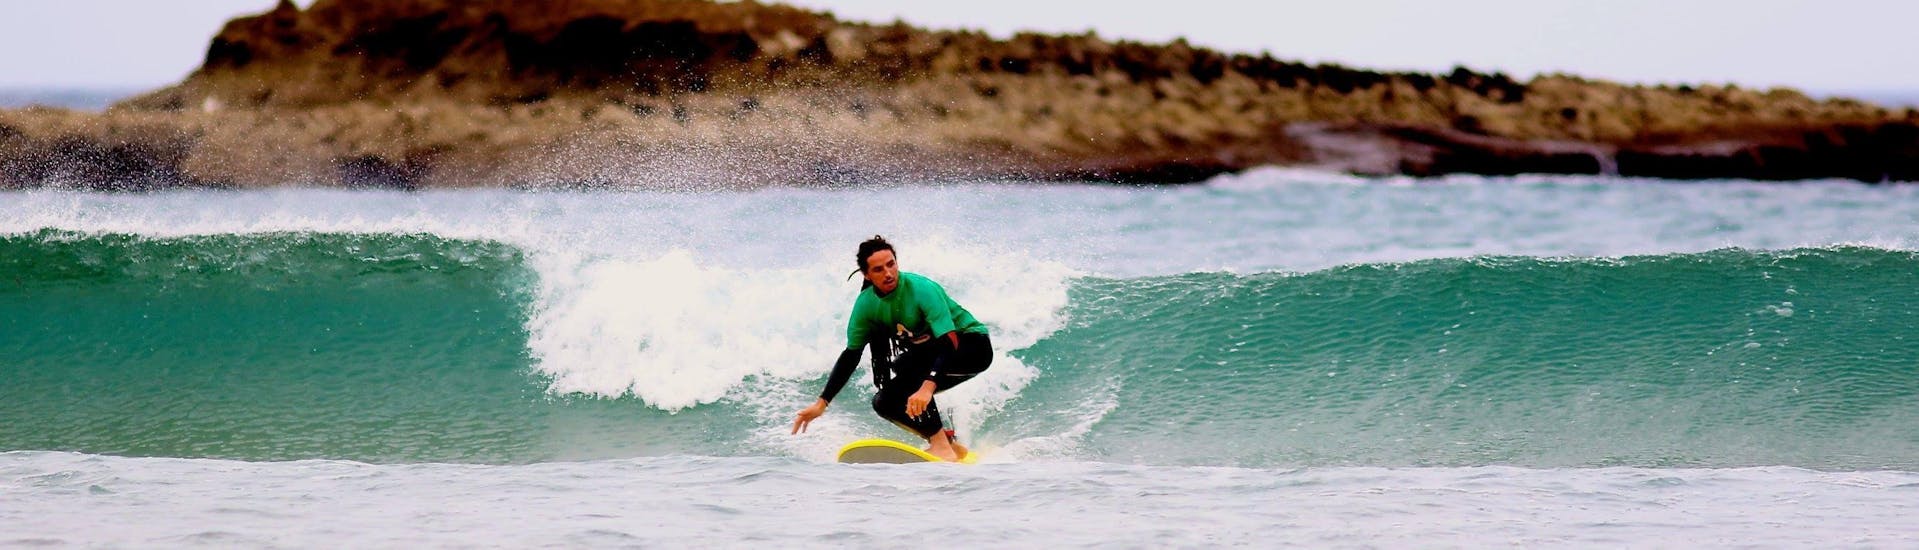 Privater Surfkurs in Carrapateira (ab 6 J.) für alle Levels.